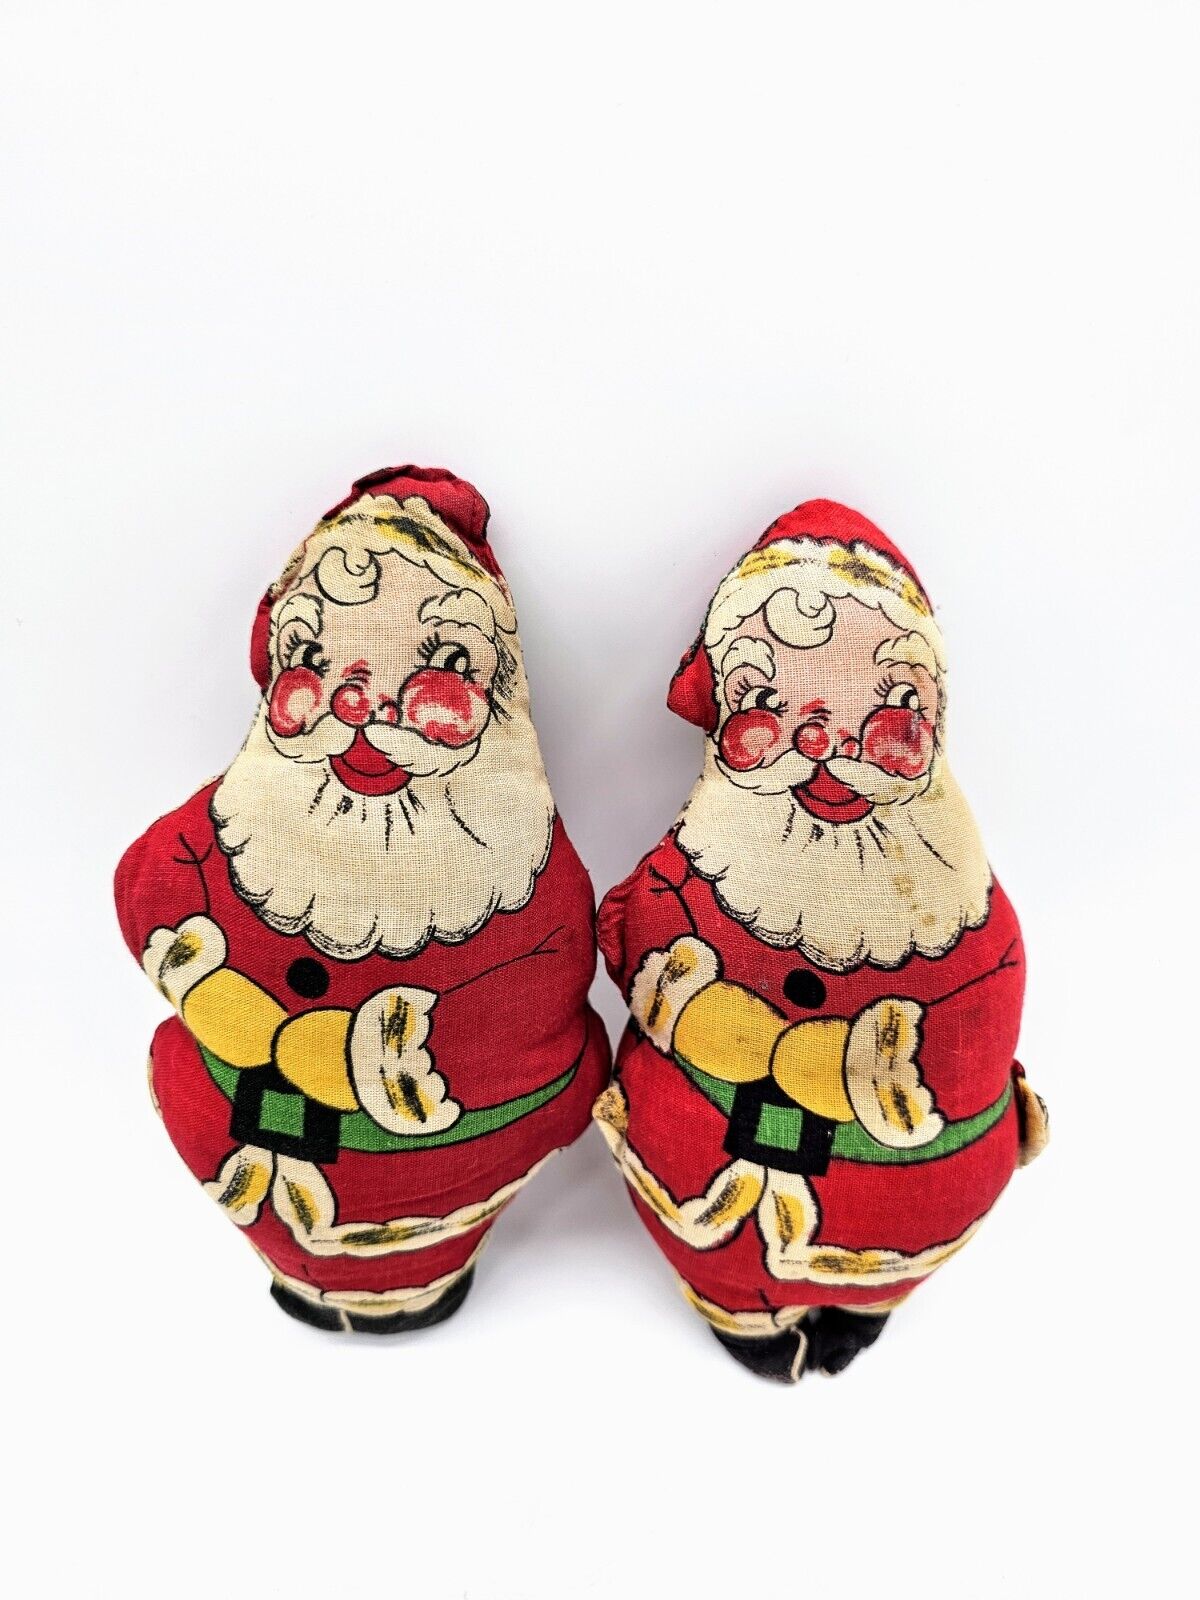 Vintage Stuffed Santa Claus Pair Stuffed Fabric Christmas Decorations